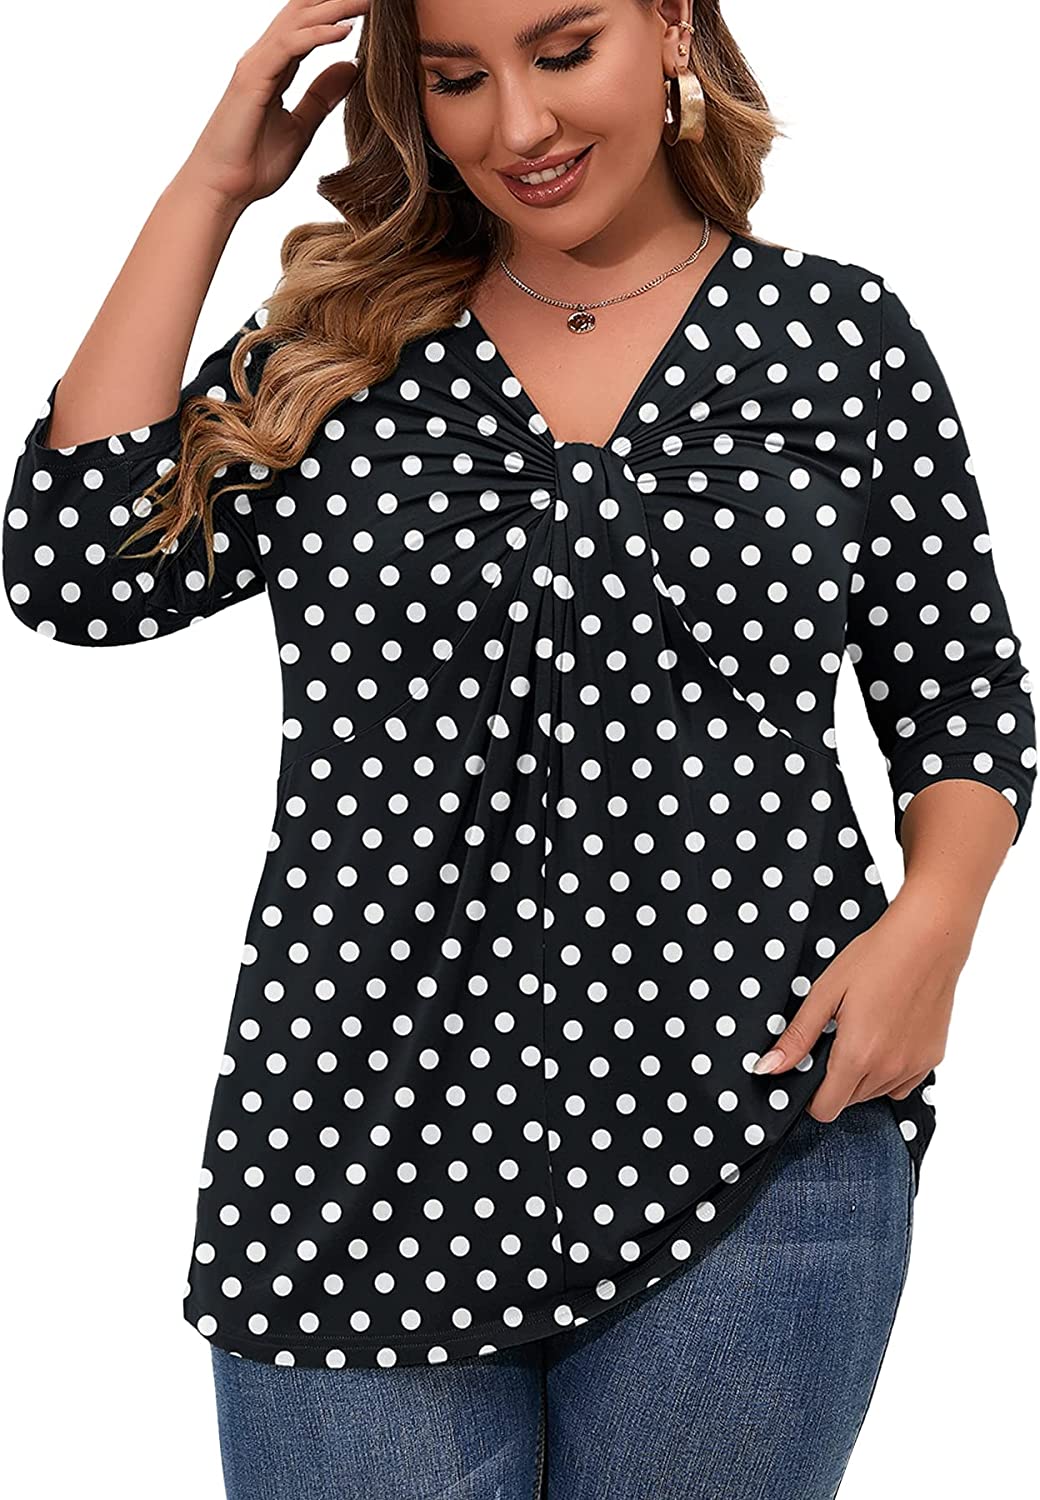 AusLook Women's Plus Size T Shirt Basic V Neck Tee Short Sleeve